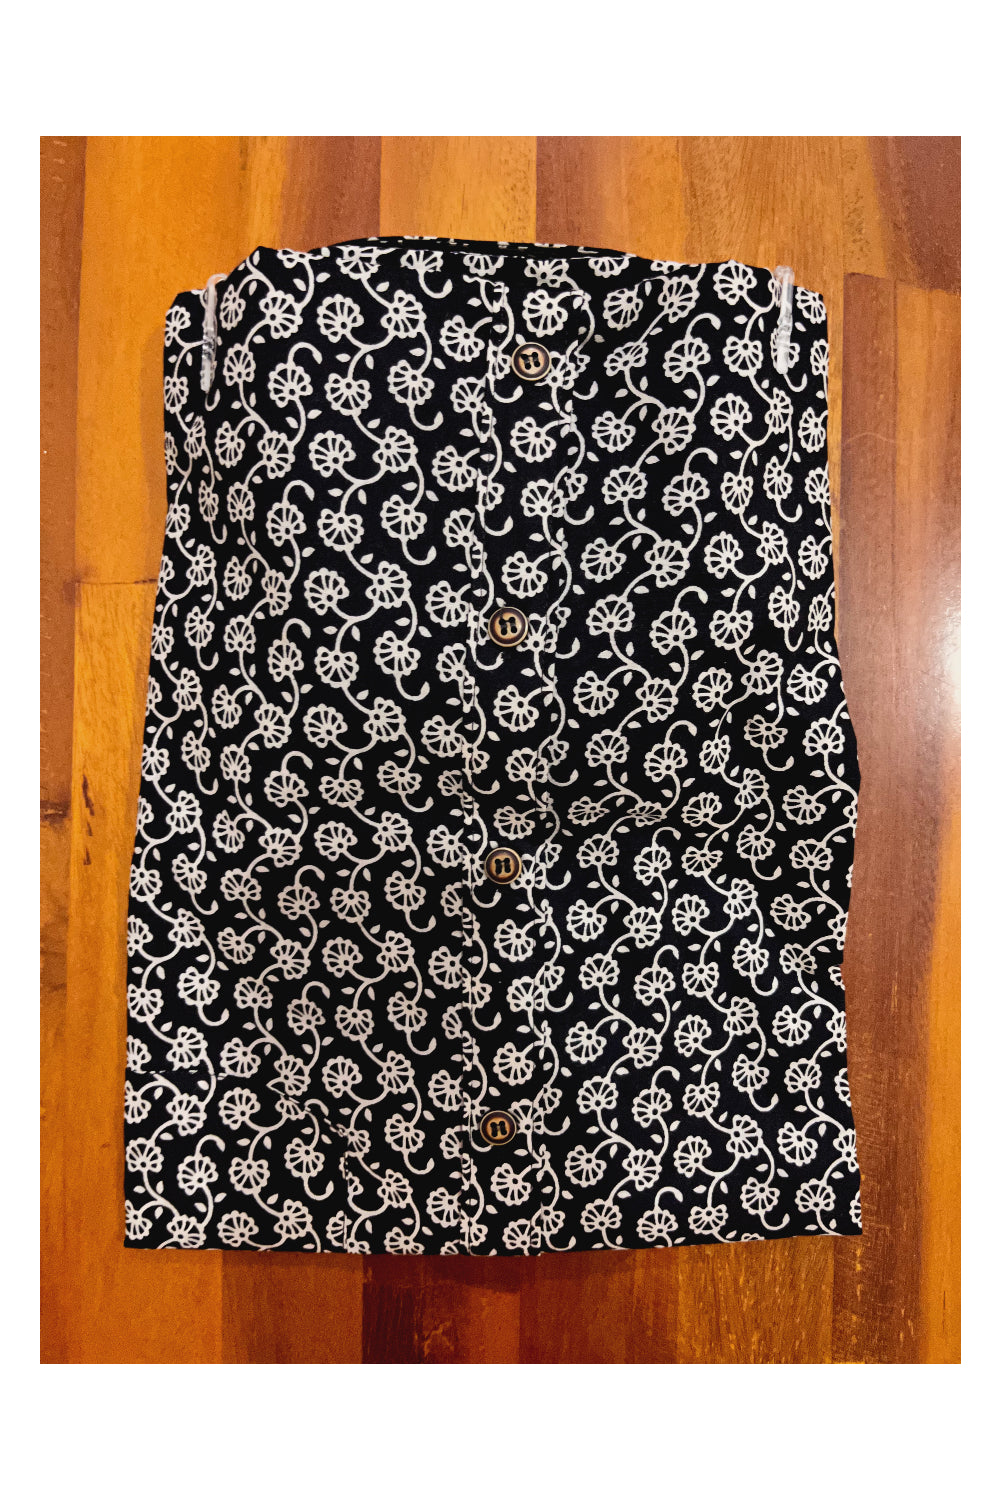 Southloom Jaipur Cotton Black Floral Hand Block Printed Shirt (Half Sleeves)